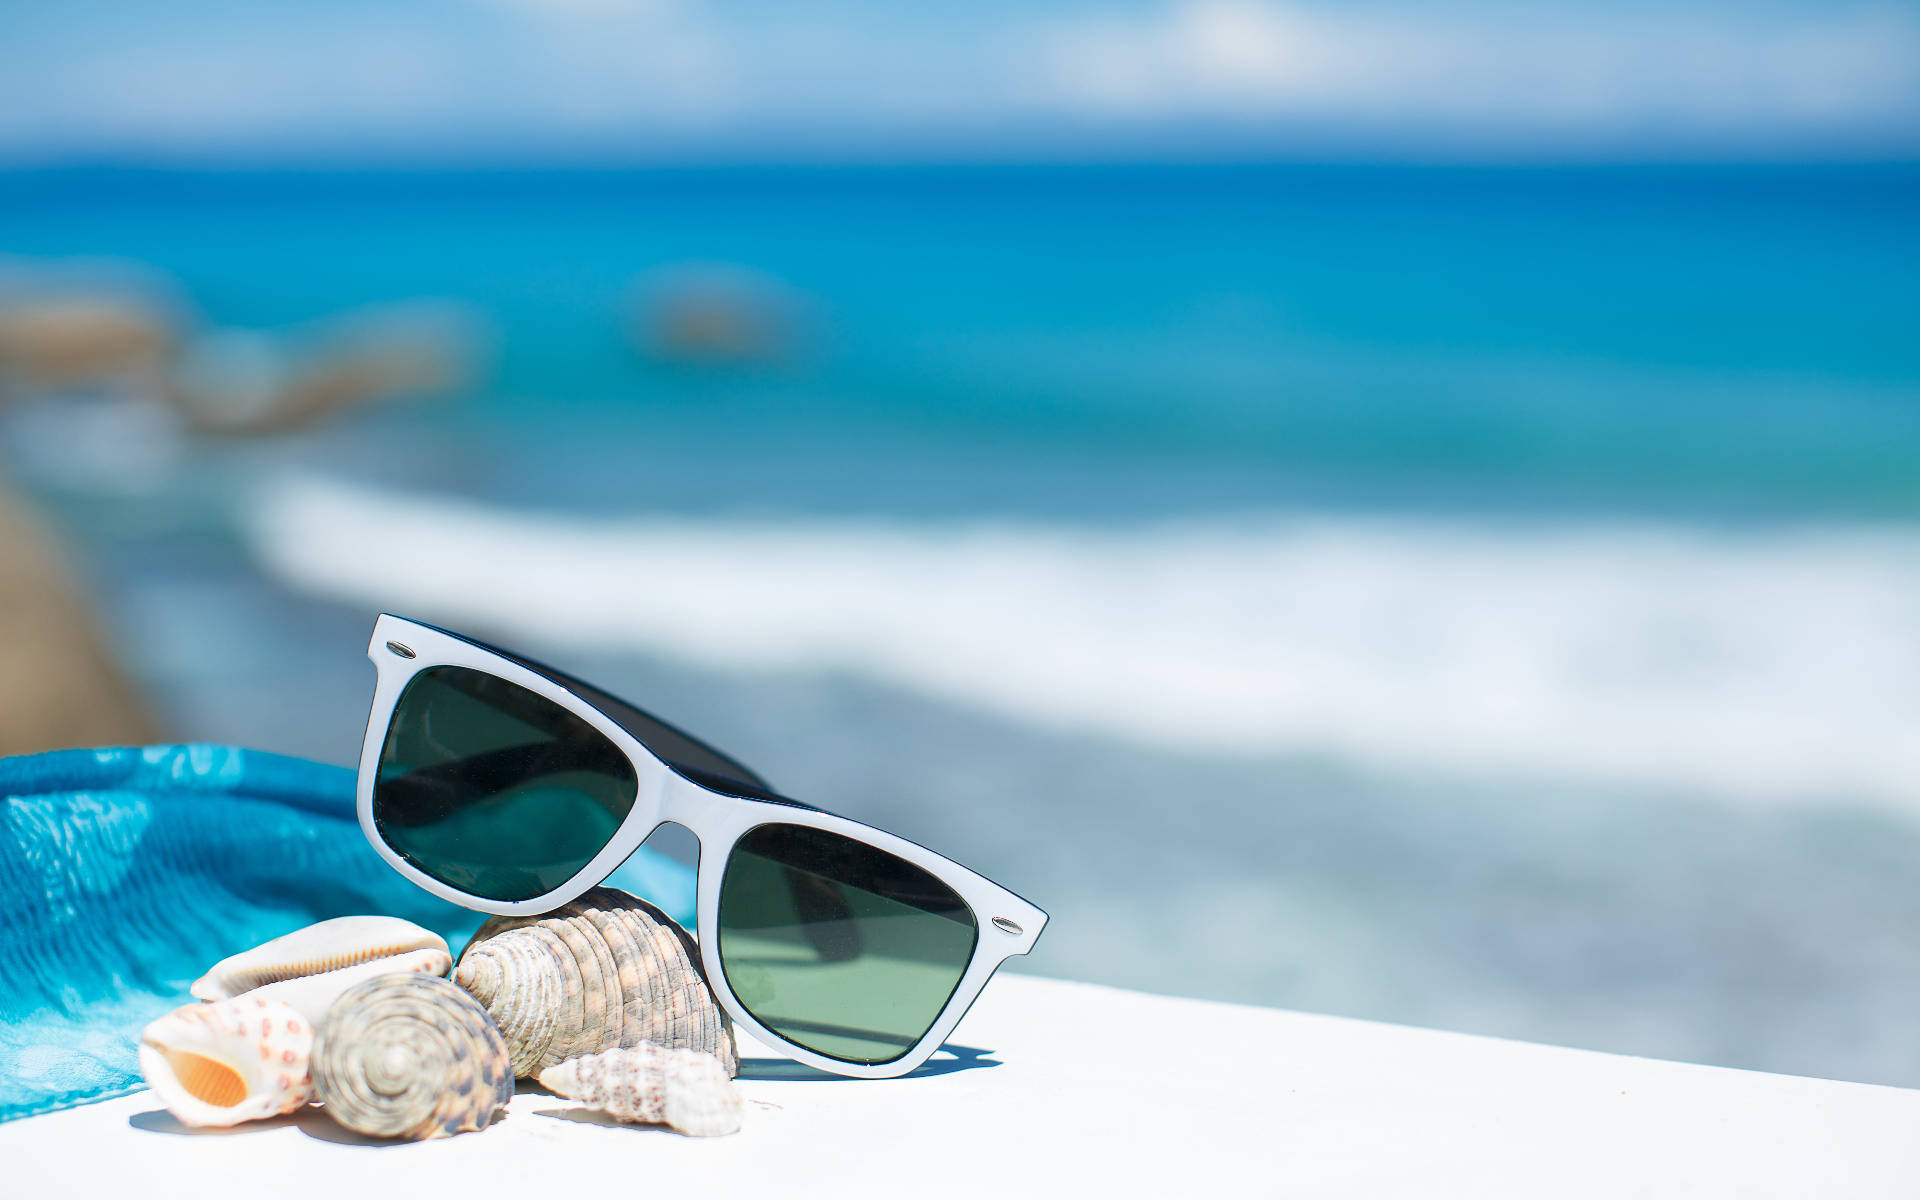 Sunglasses And Shells Wallpaper